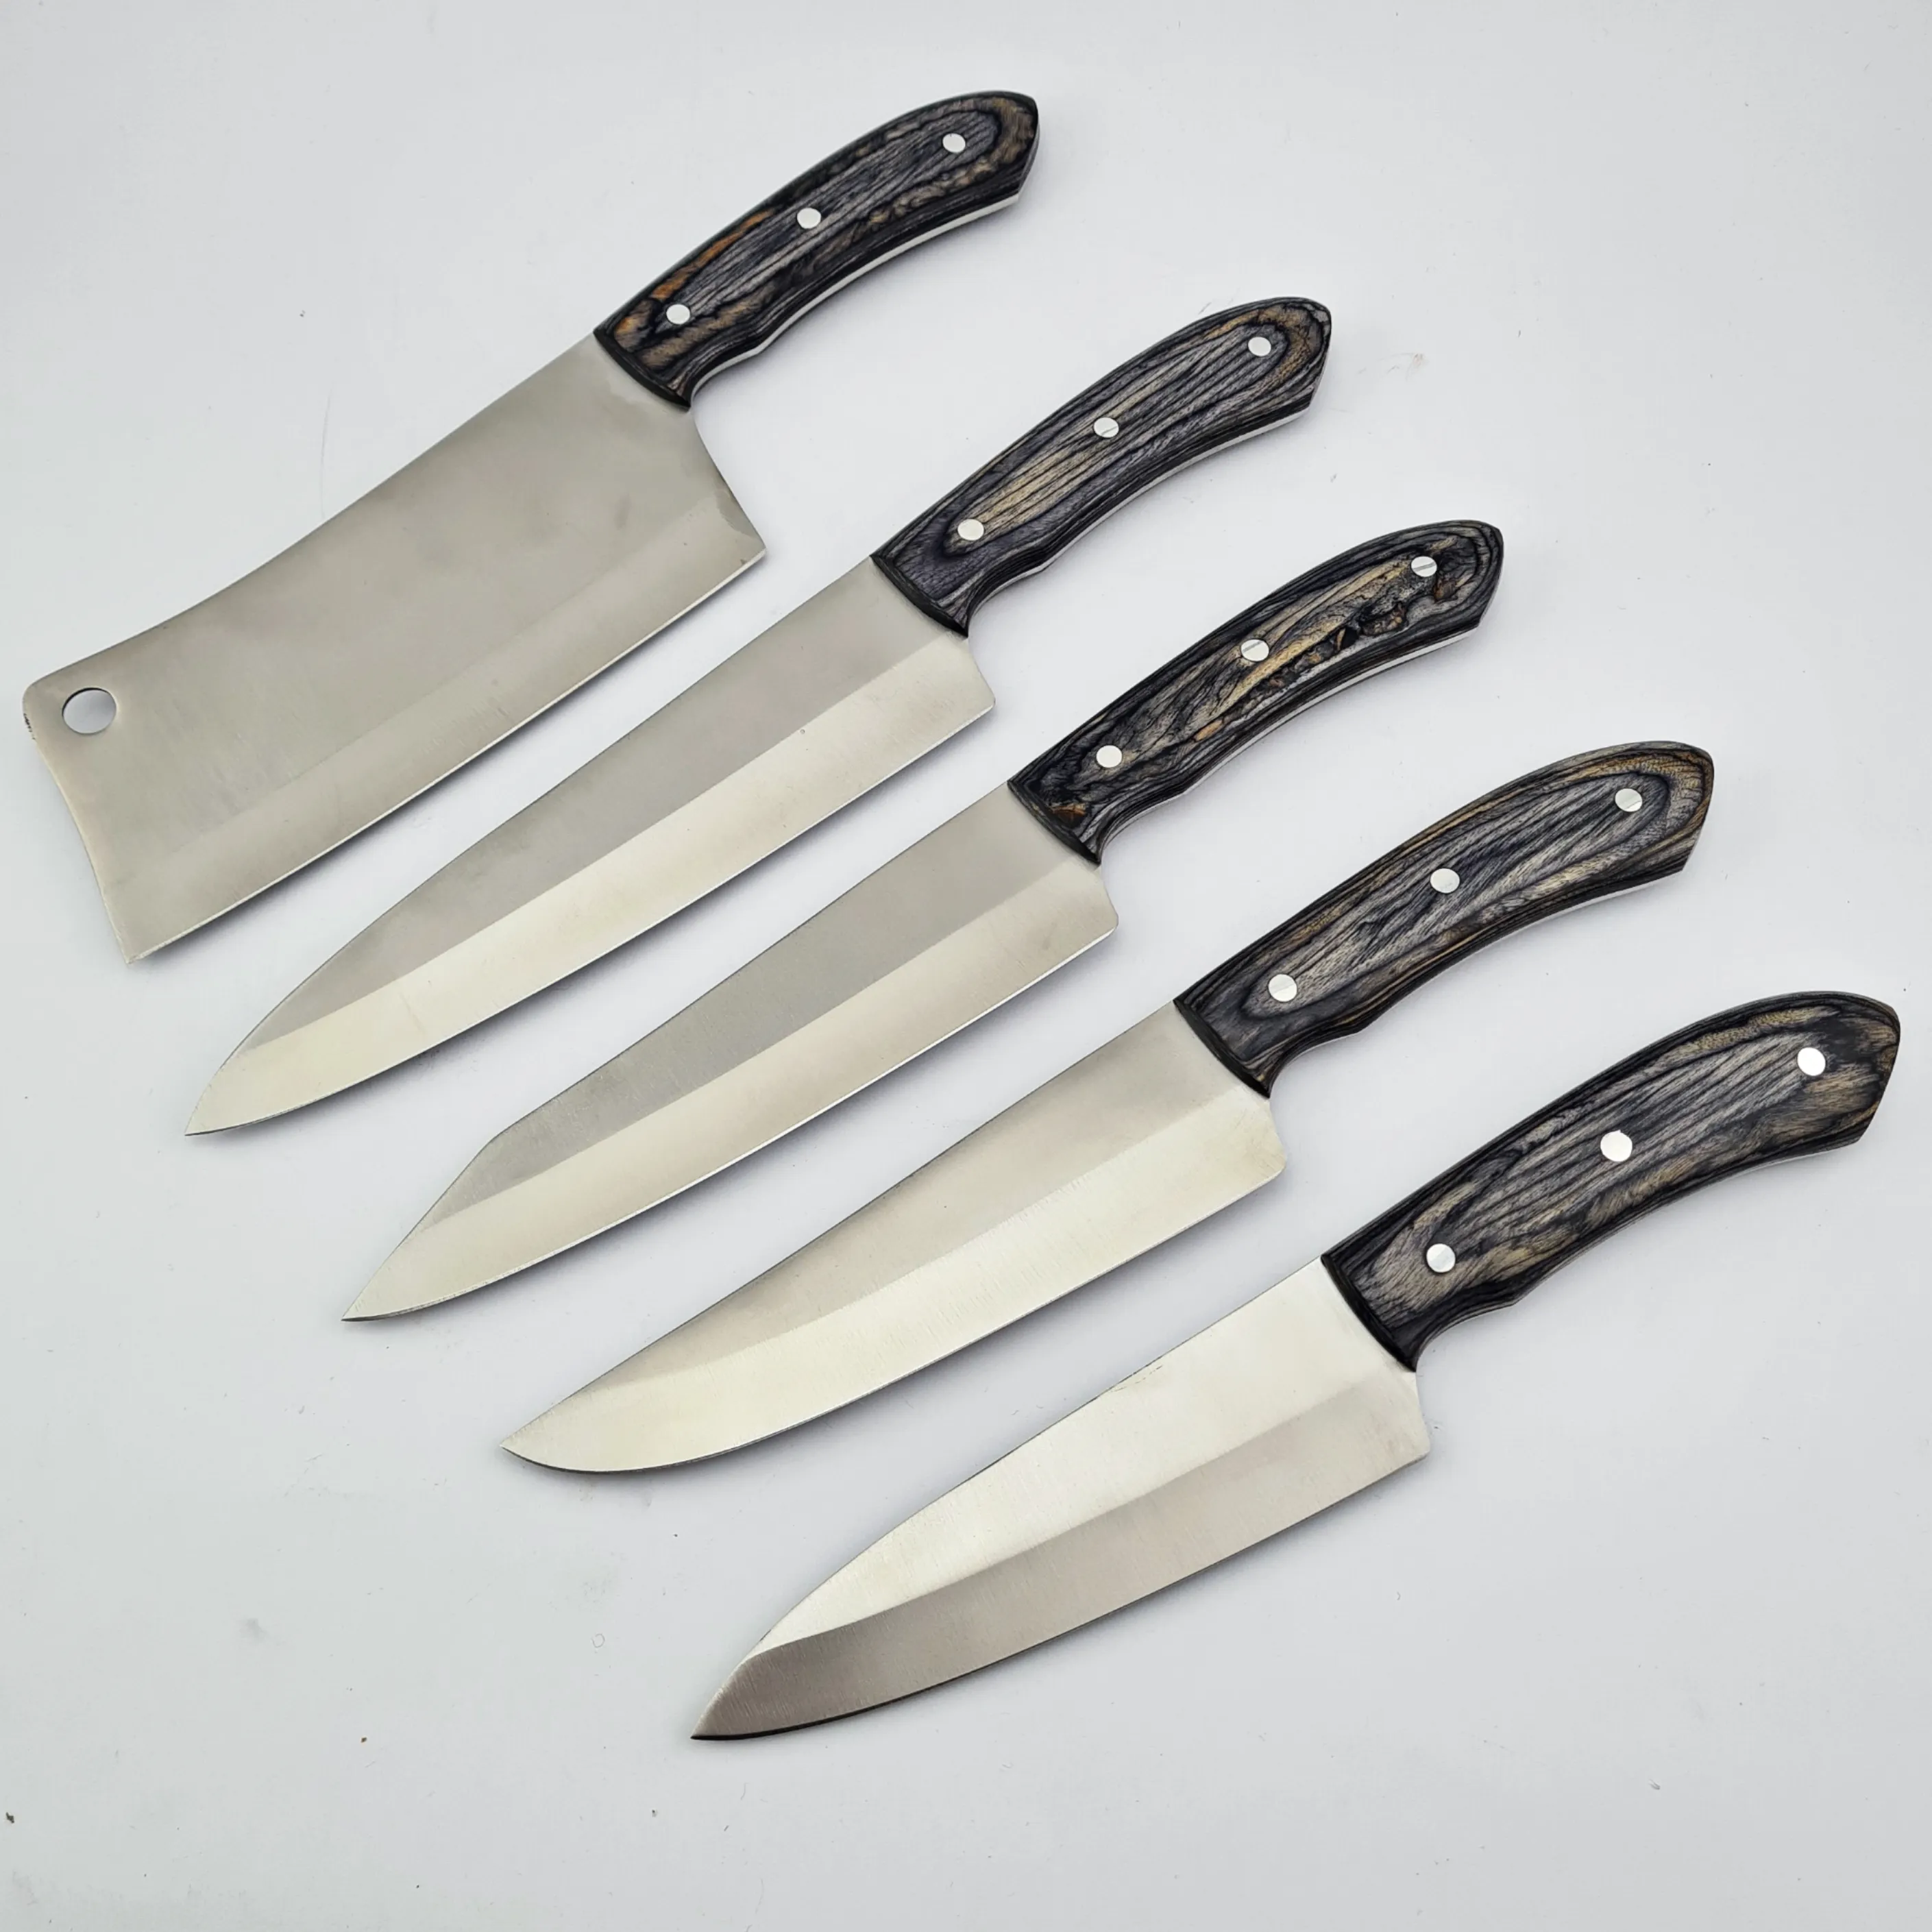 12 Chromium Steel Chef Knife Set Professional Handmade Five Kitchen Knives Set Handle Black Pakka Wood Premium Quality